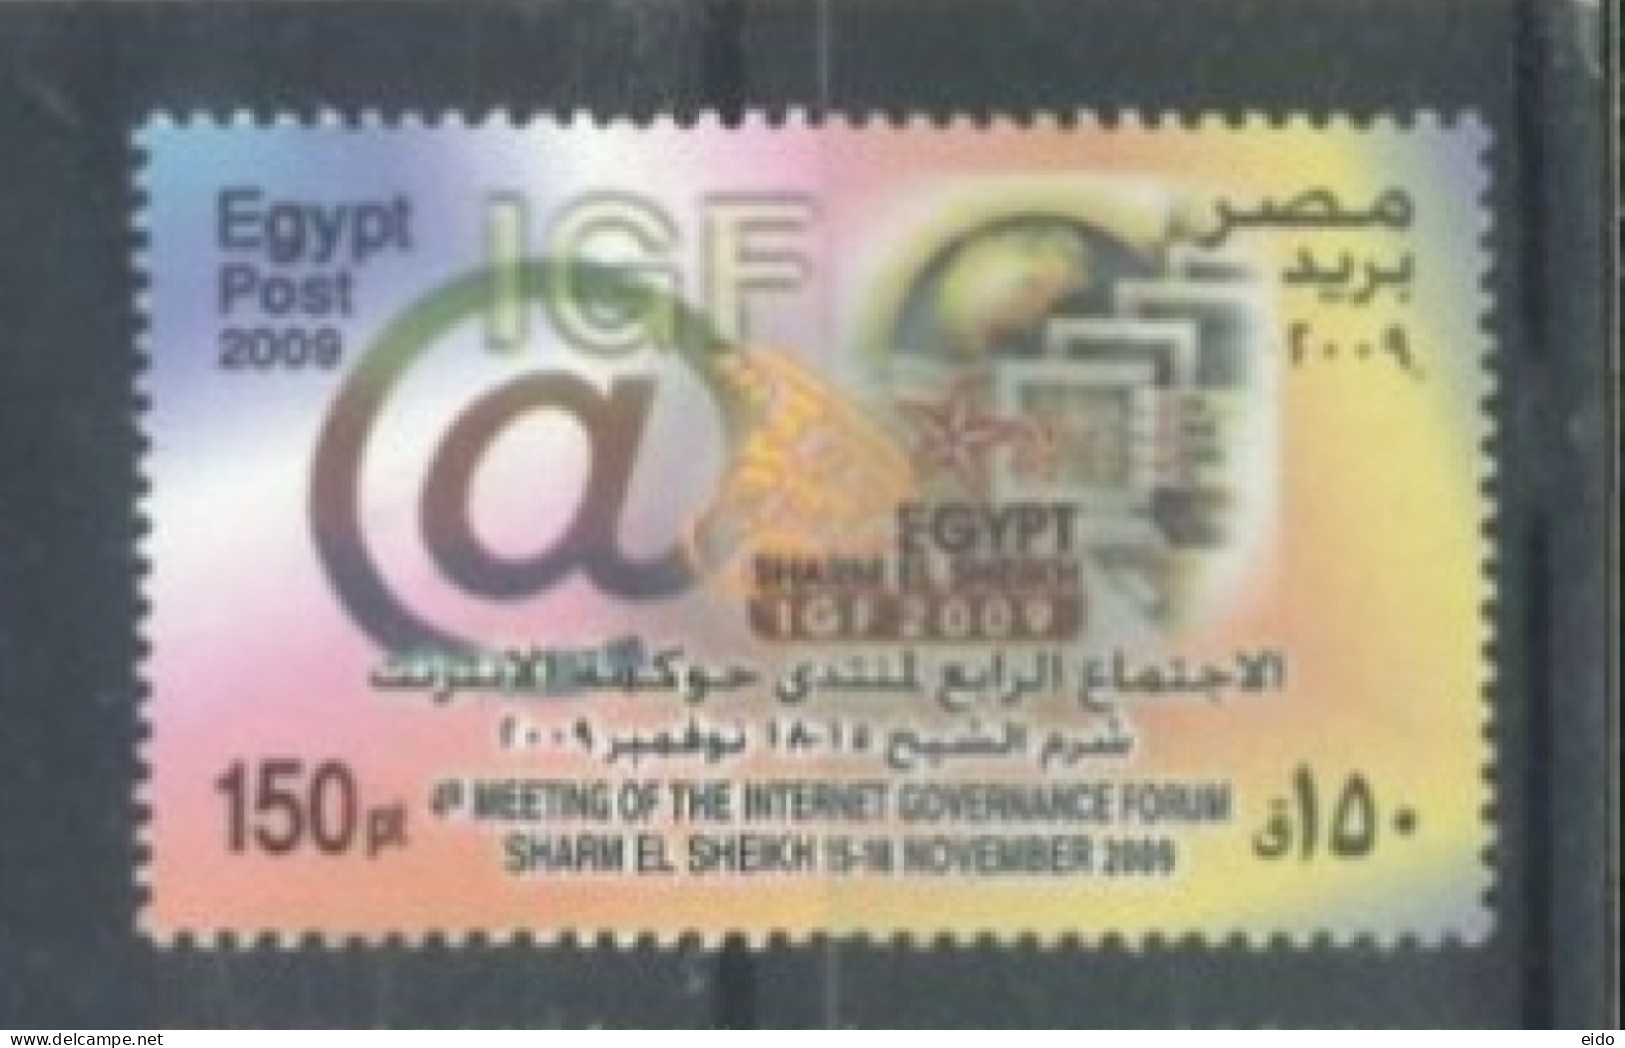 EGYPT - 2009, 4th MEETING OF INTERNET GOVERNANCE FORUM, SHARM EL SHEIKH STAMP UMM (**). - Storia Postale